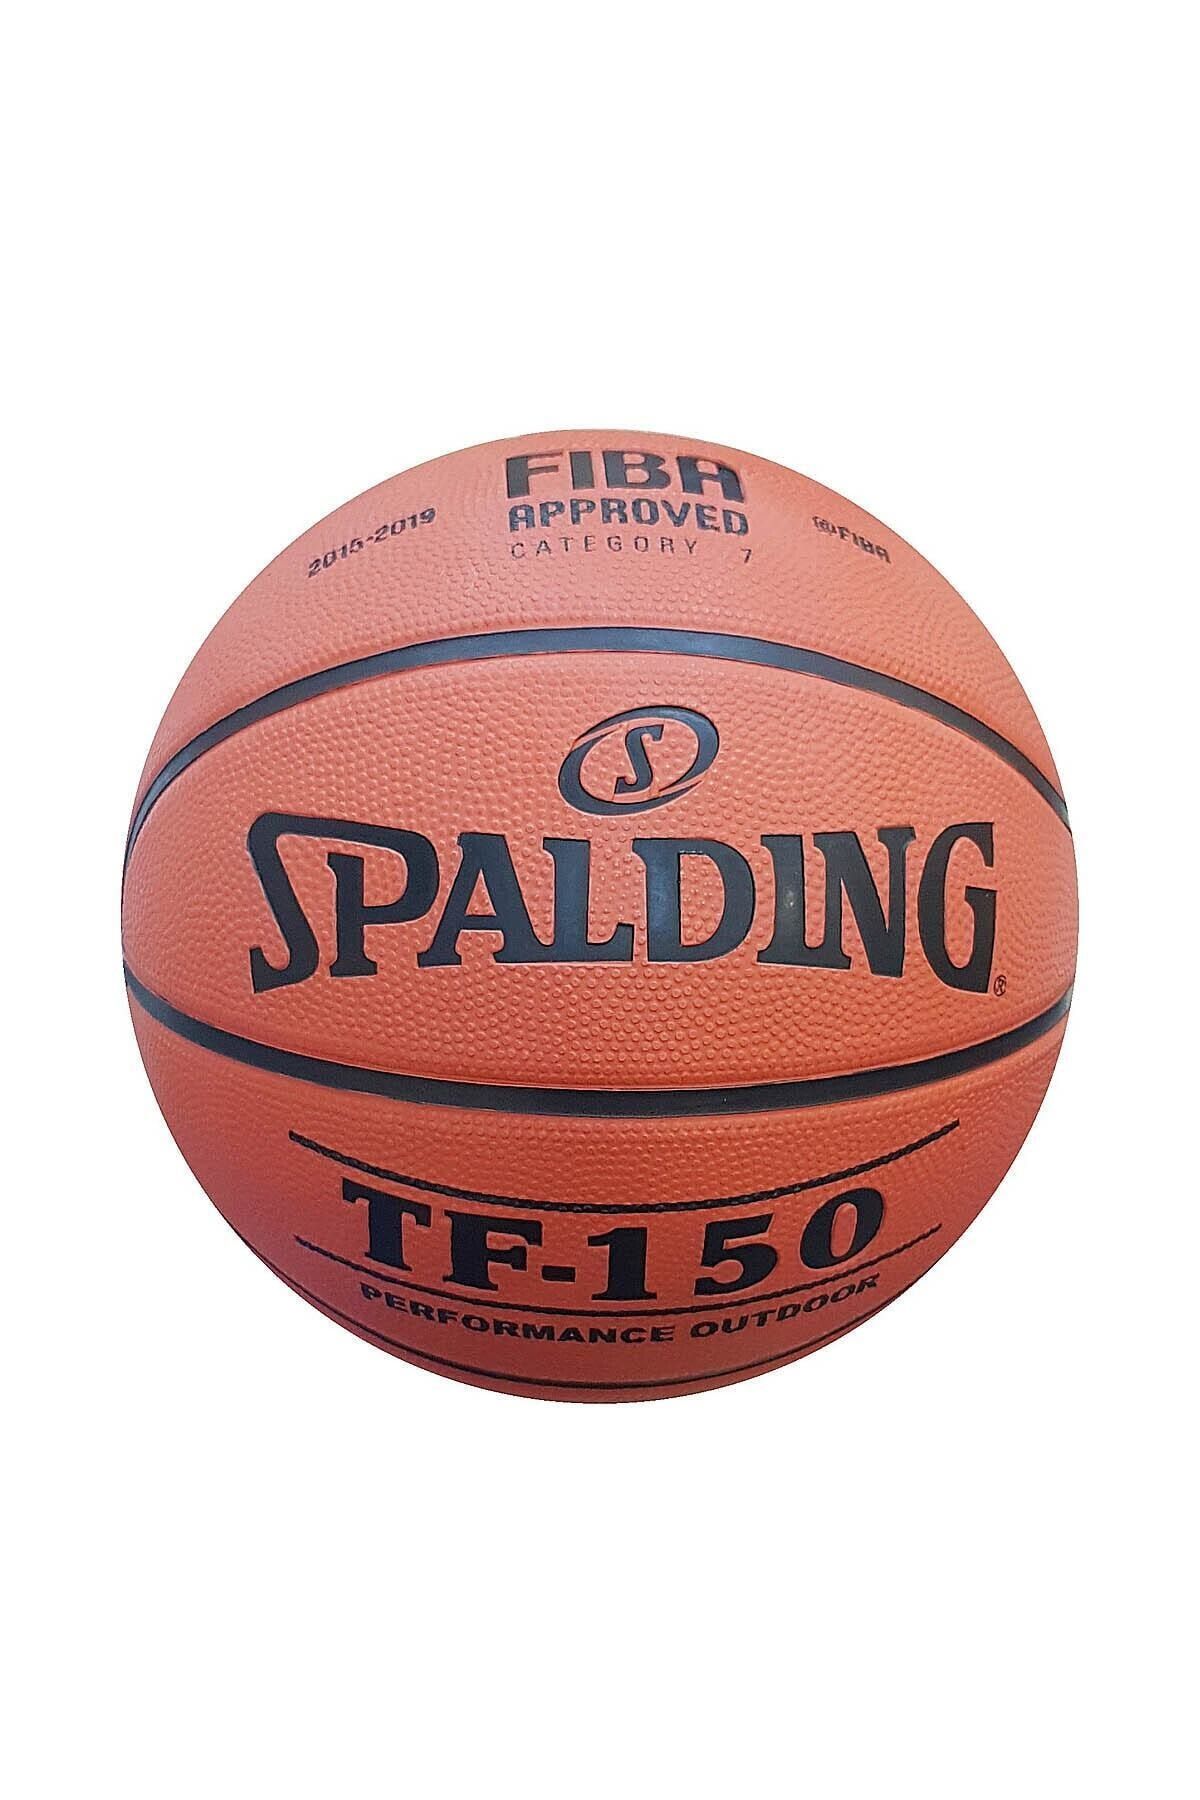 Avessa Spalding Tf-150 Basketbol Topu Size 7 Fiba Logolu